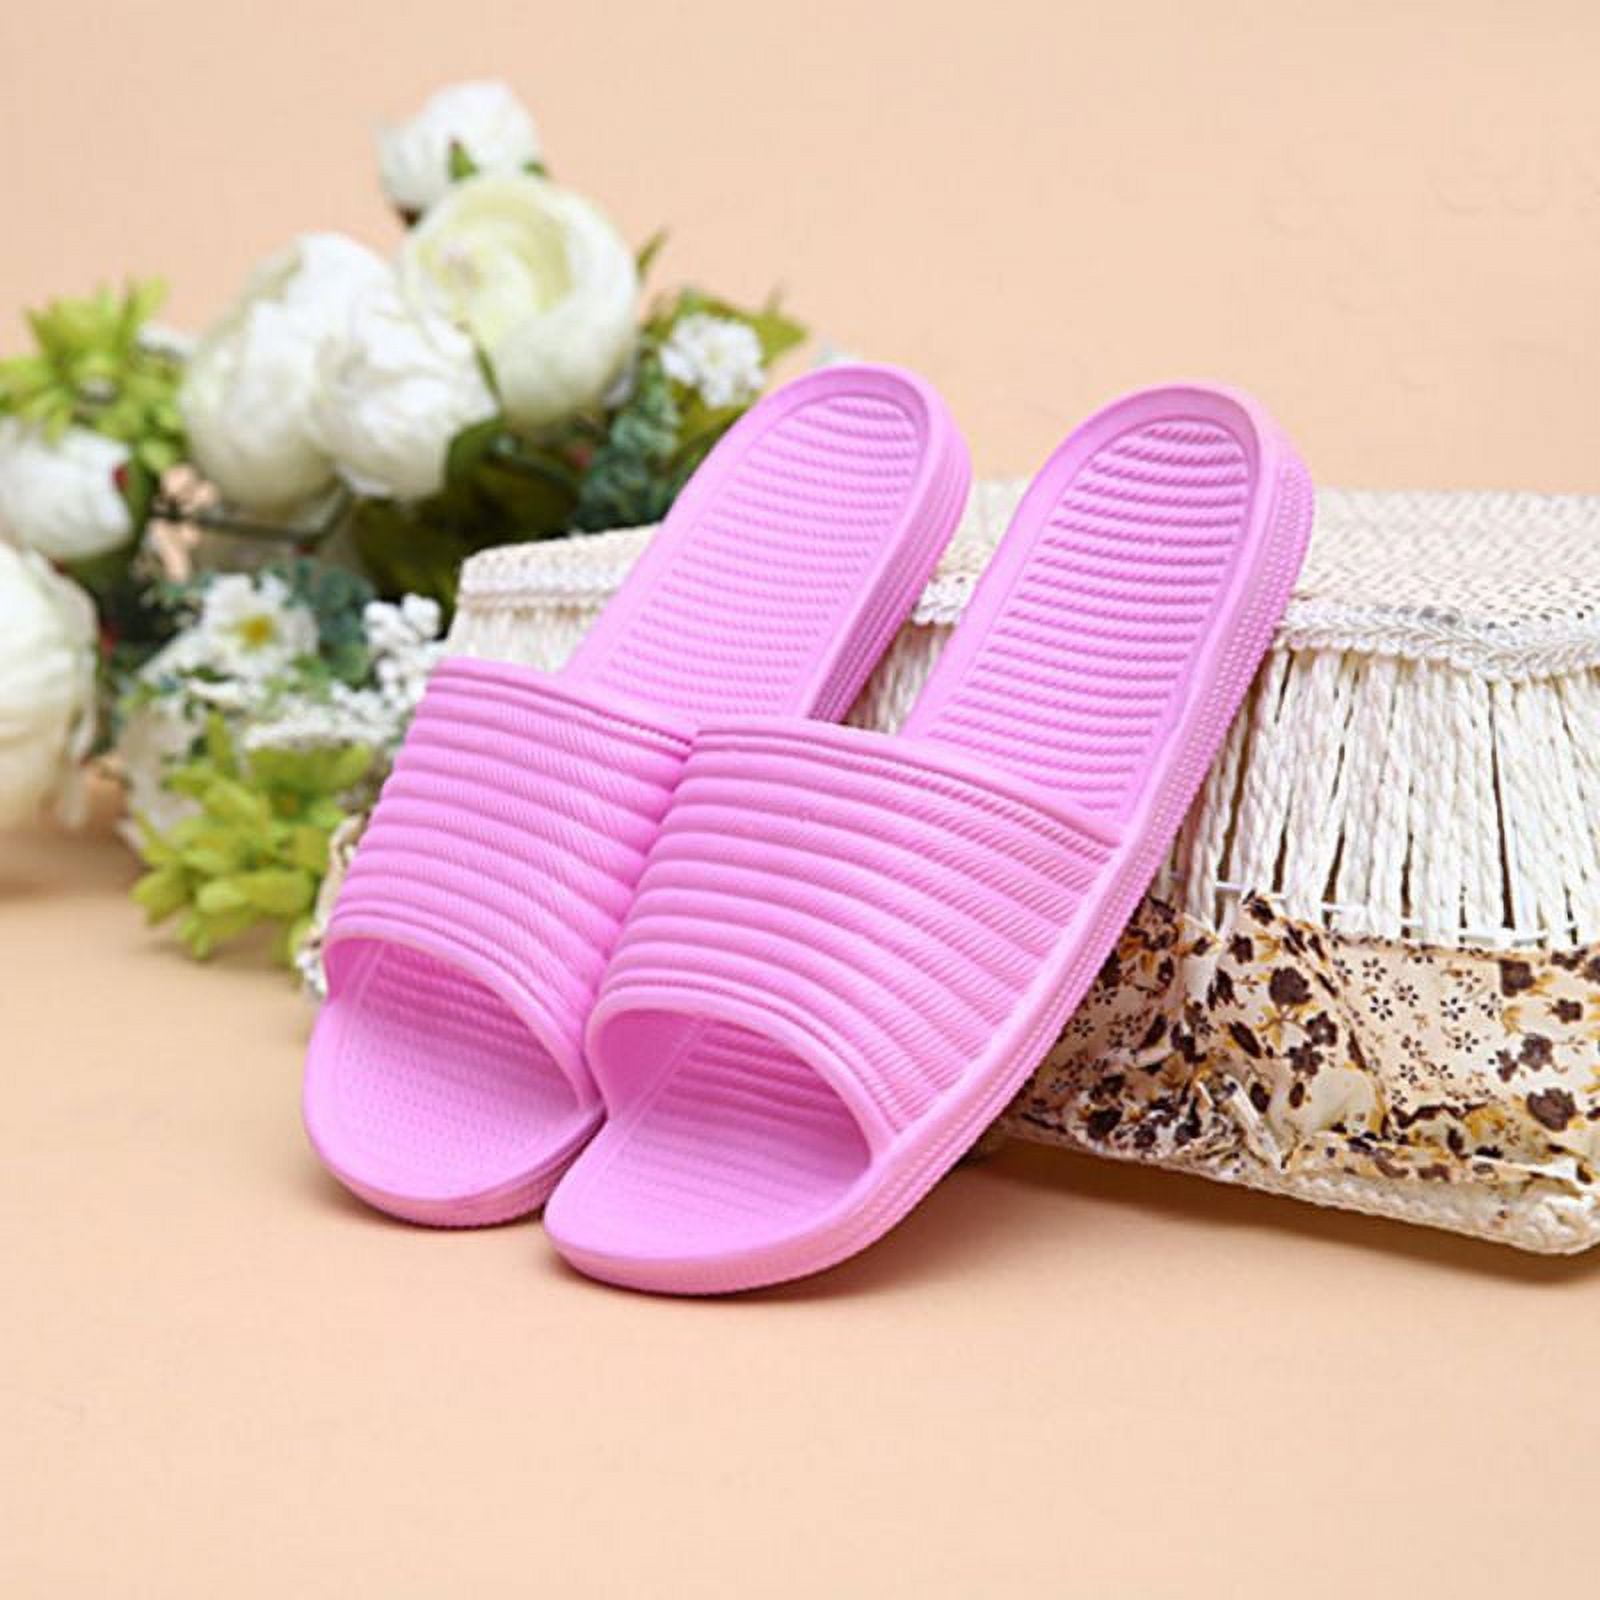 Cheap wholesale Female sandals Summer New| Alibaba.com